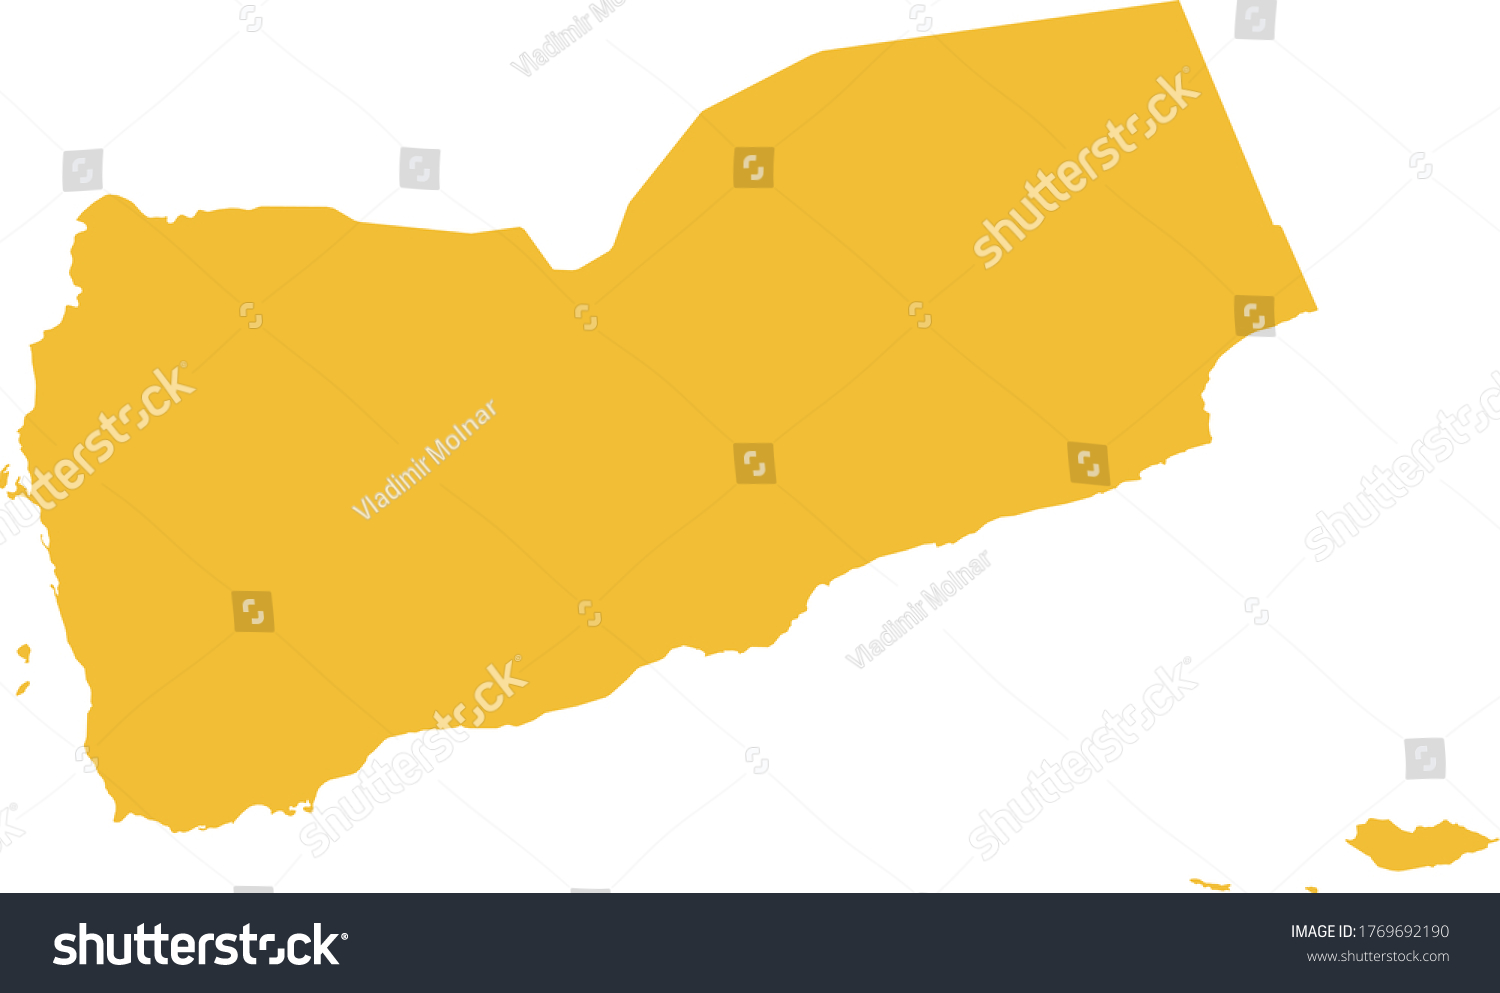 Vector Illustration Of Yemen Map Royalty Free Stock Vector 1769692190 